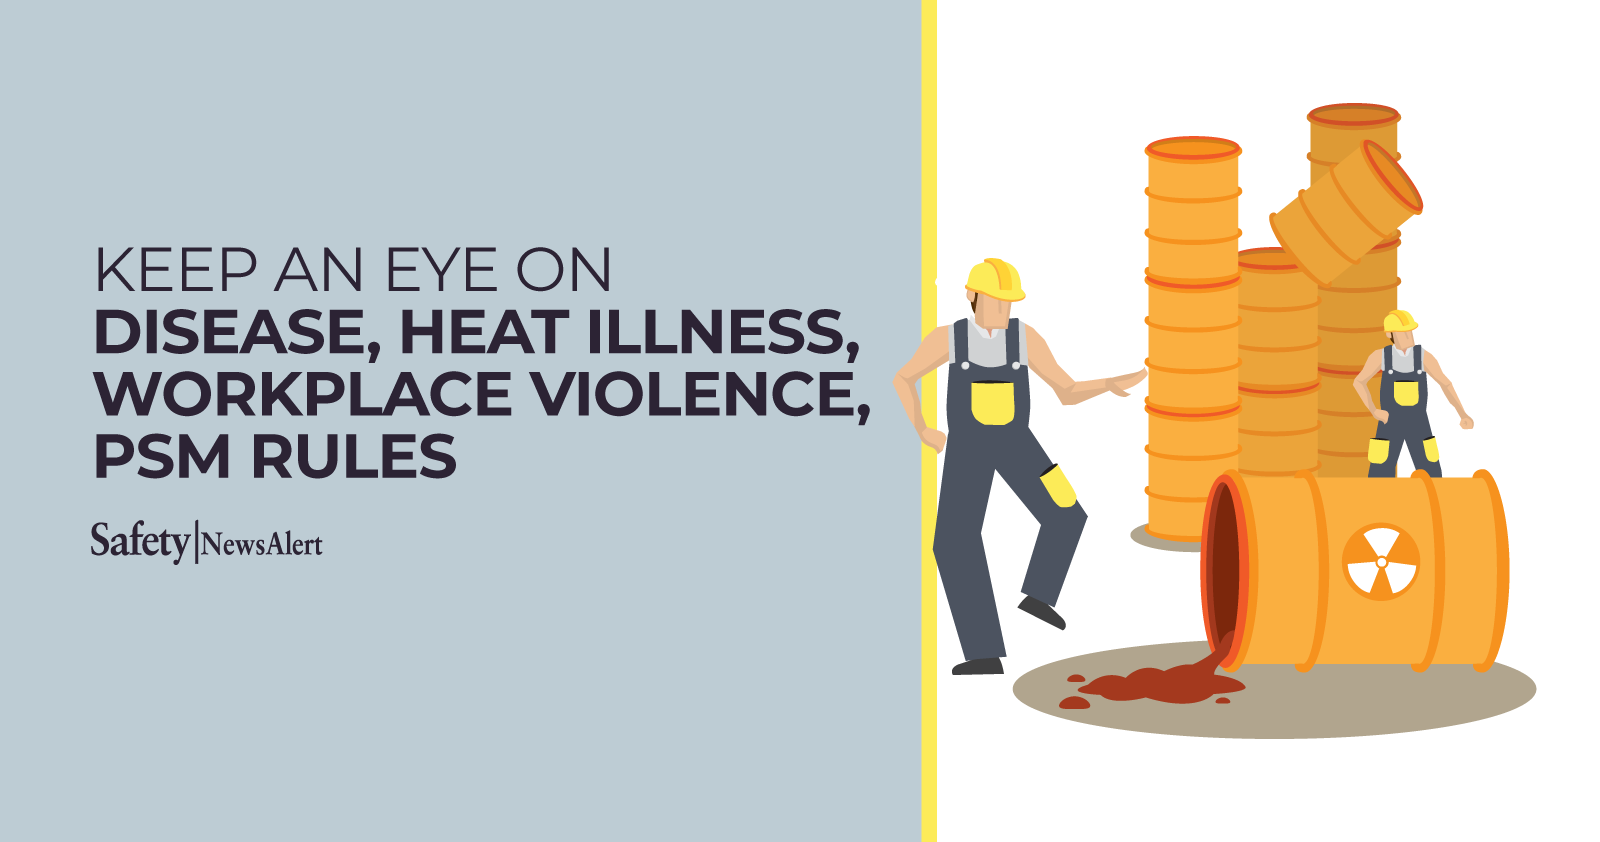 Keep an eye on disease, heat illness, workplace violence, PSM rules